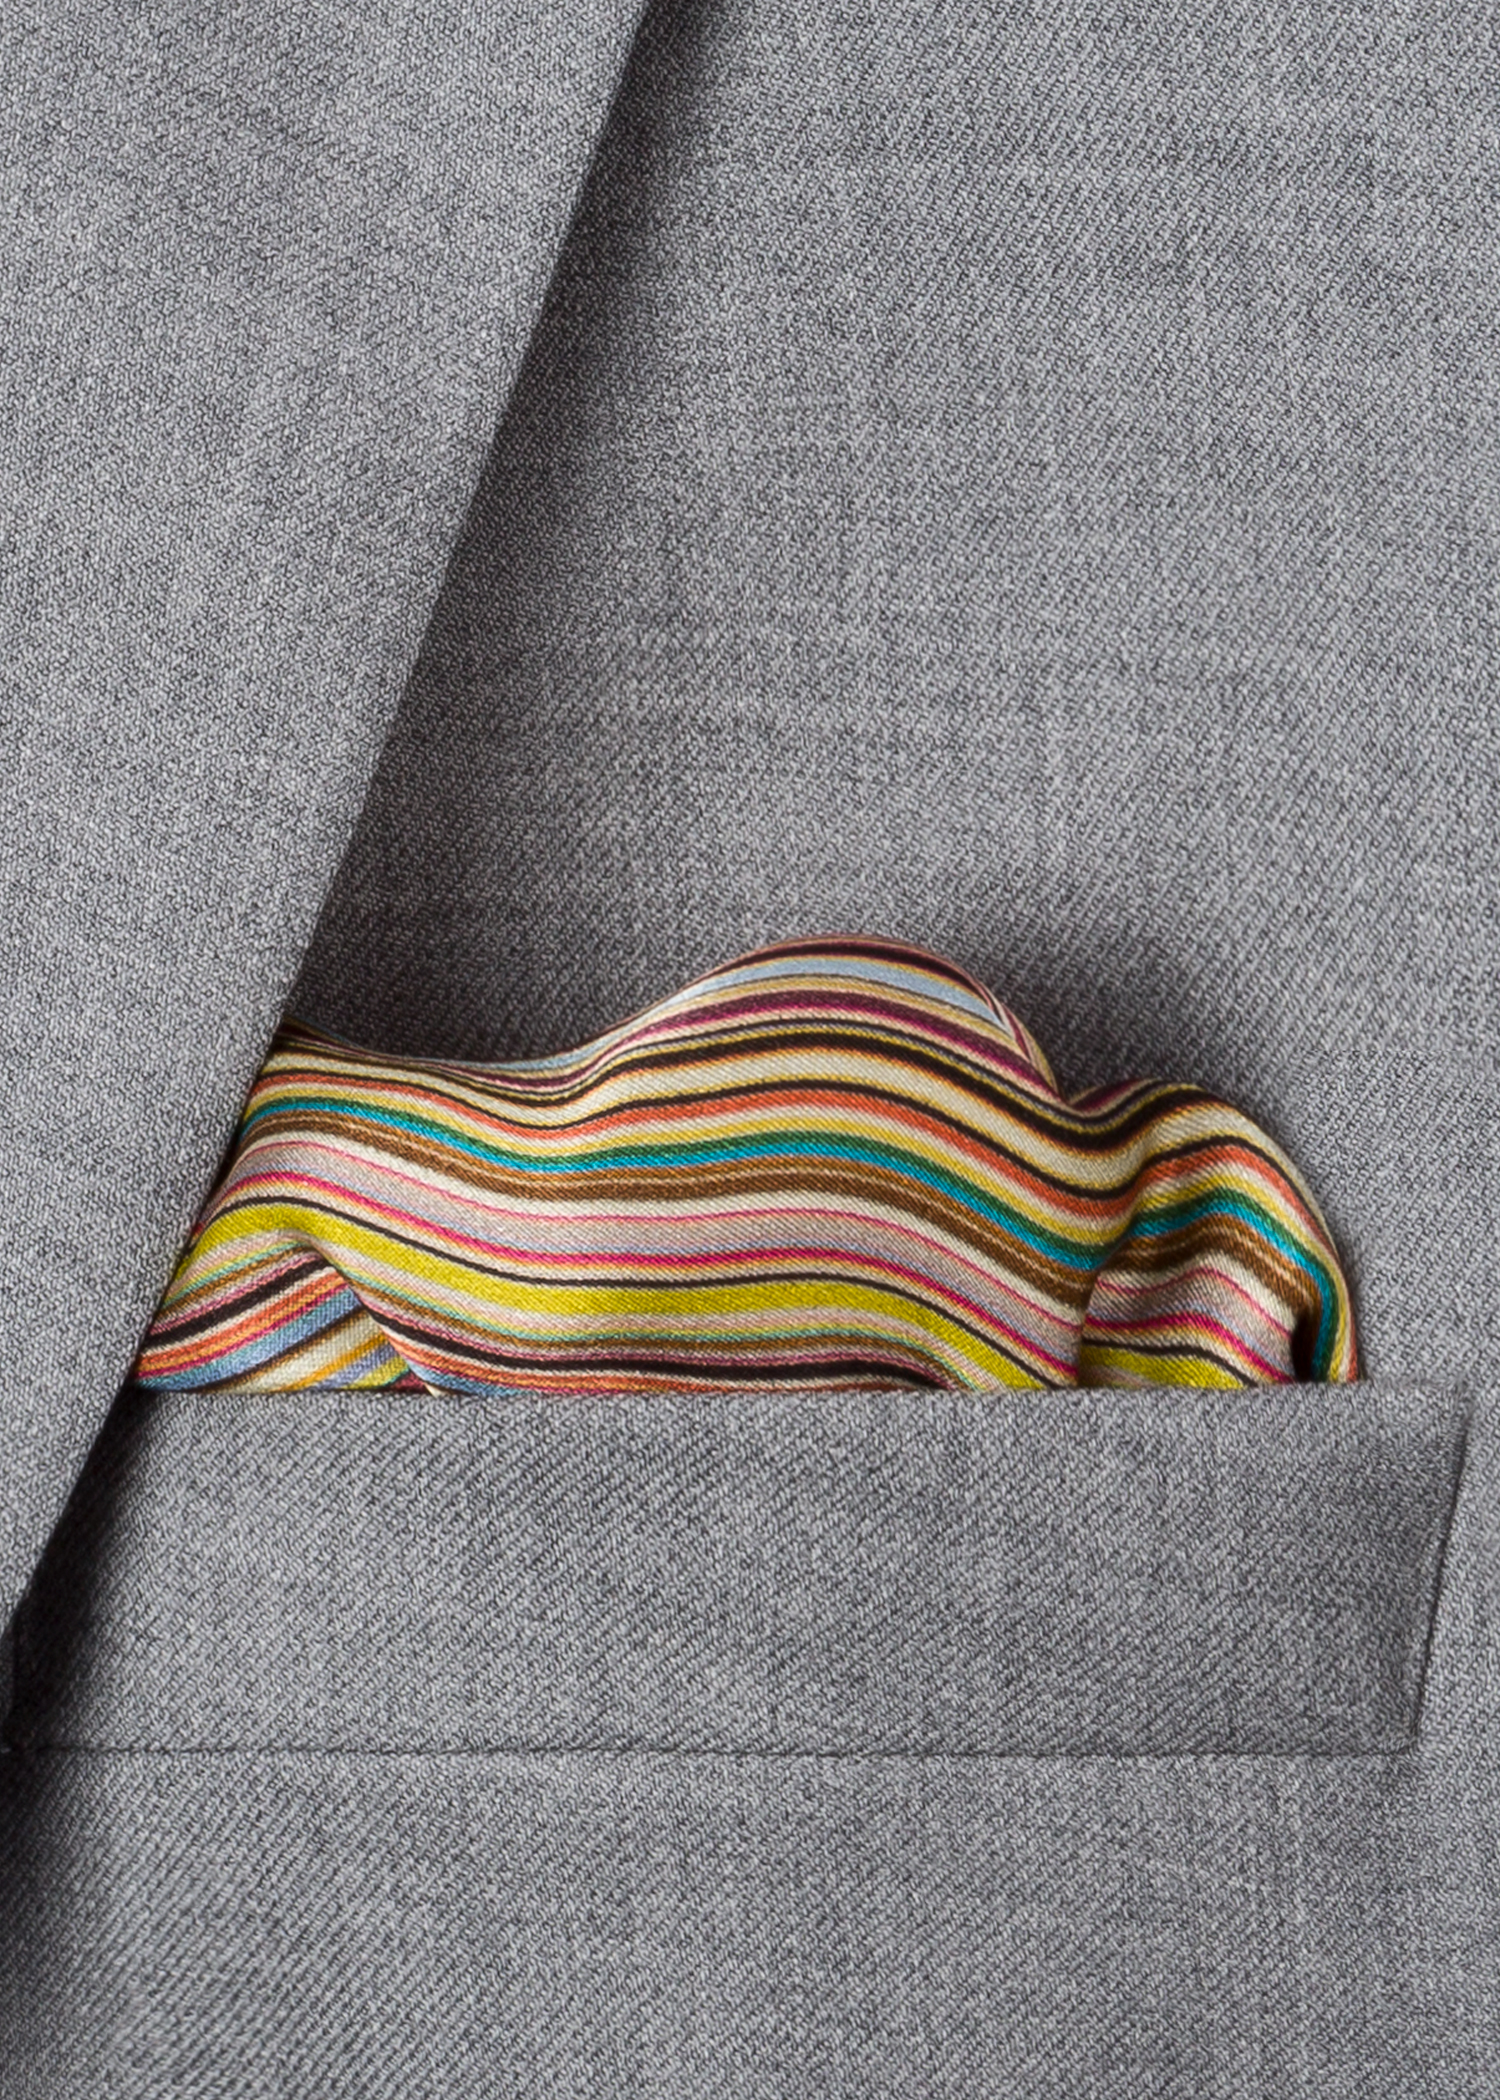 Paul Smith Men's Signature Stripe Silk Pocket Square